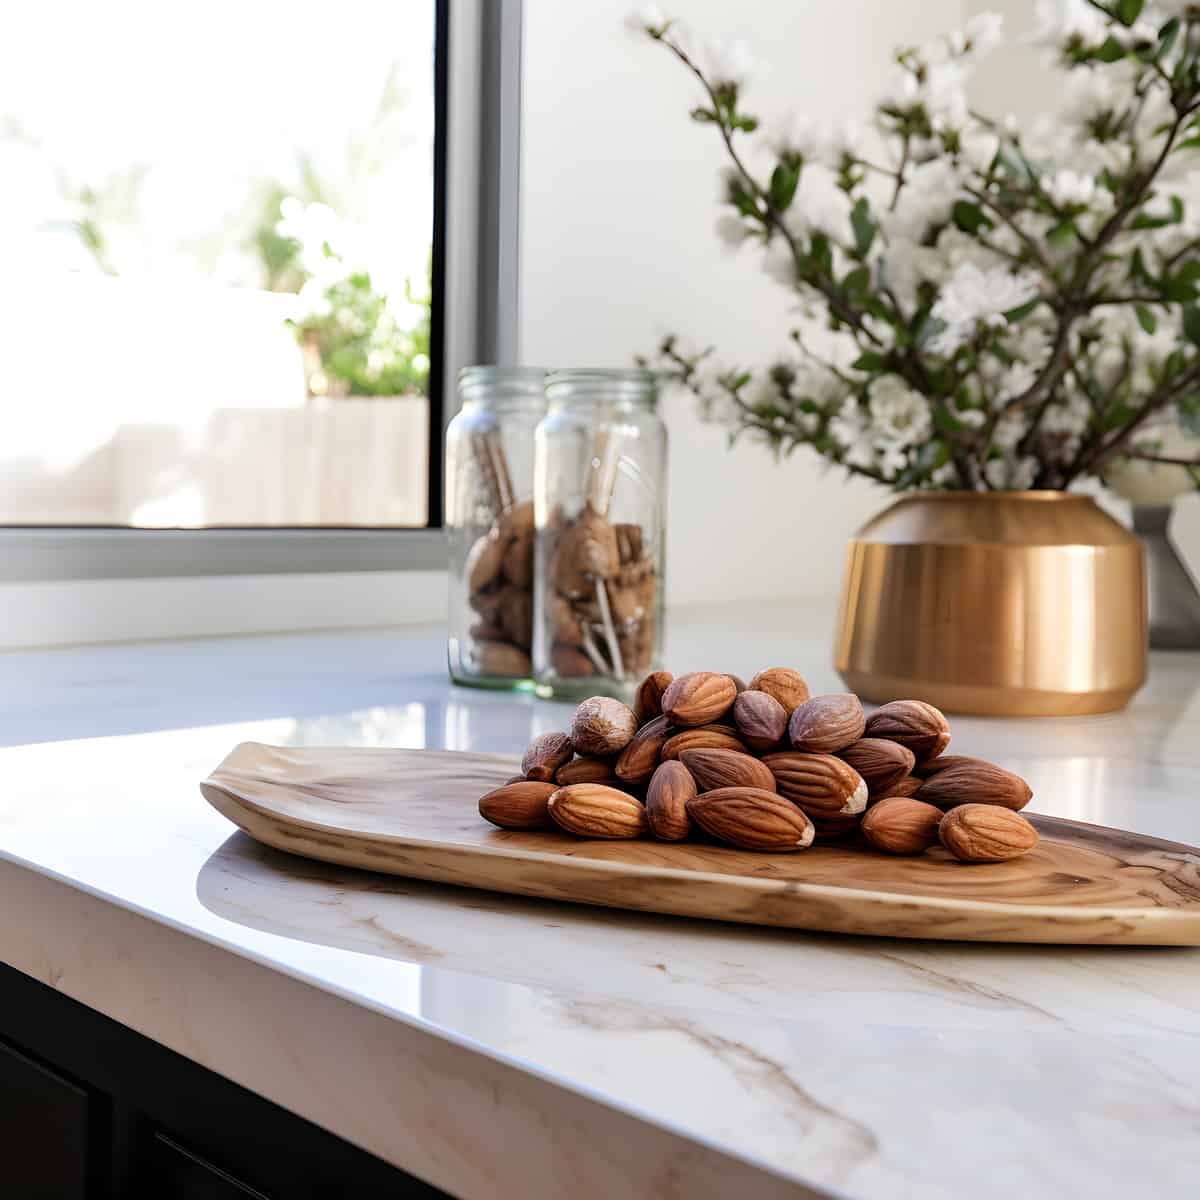 Arabian Wild Almonds on a kitchen counter